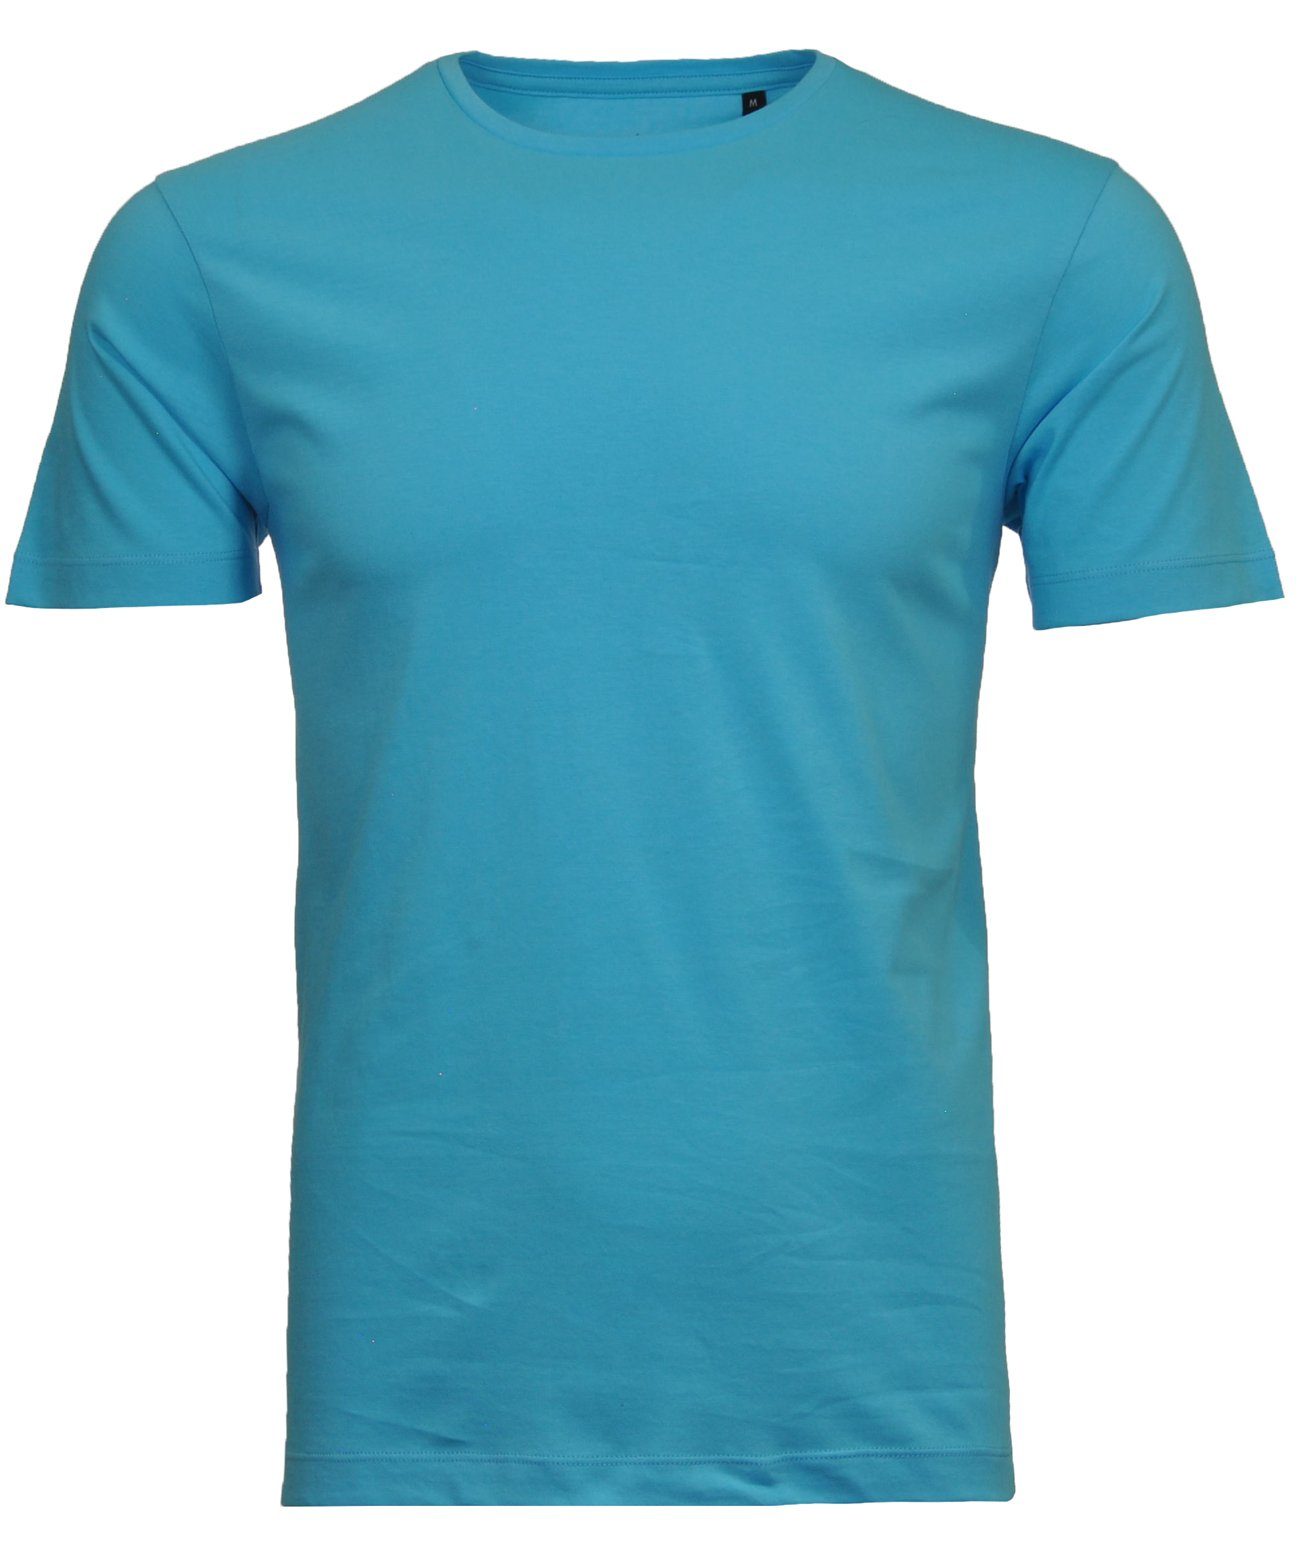 RAGMAN T-Shirt Aqua-745